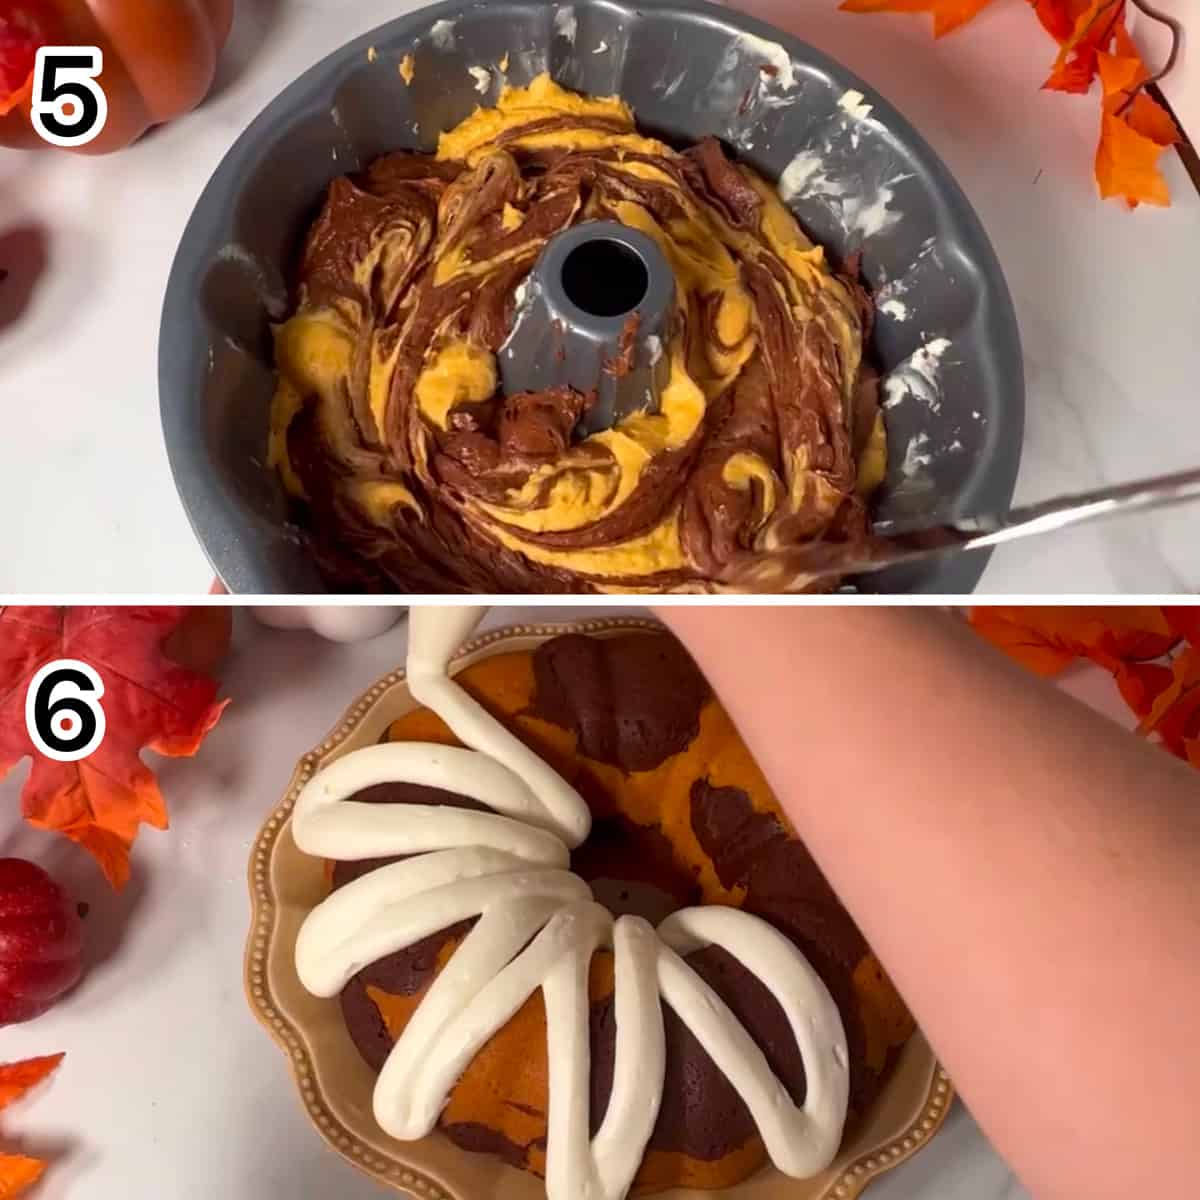 How to make pumpkin chocolate swirl cake steps five and six.